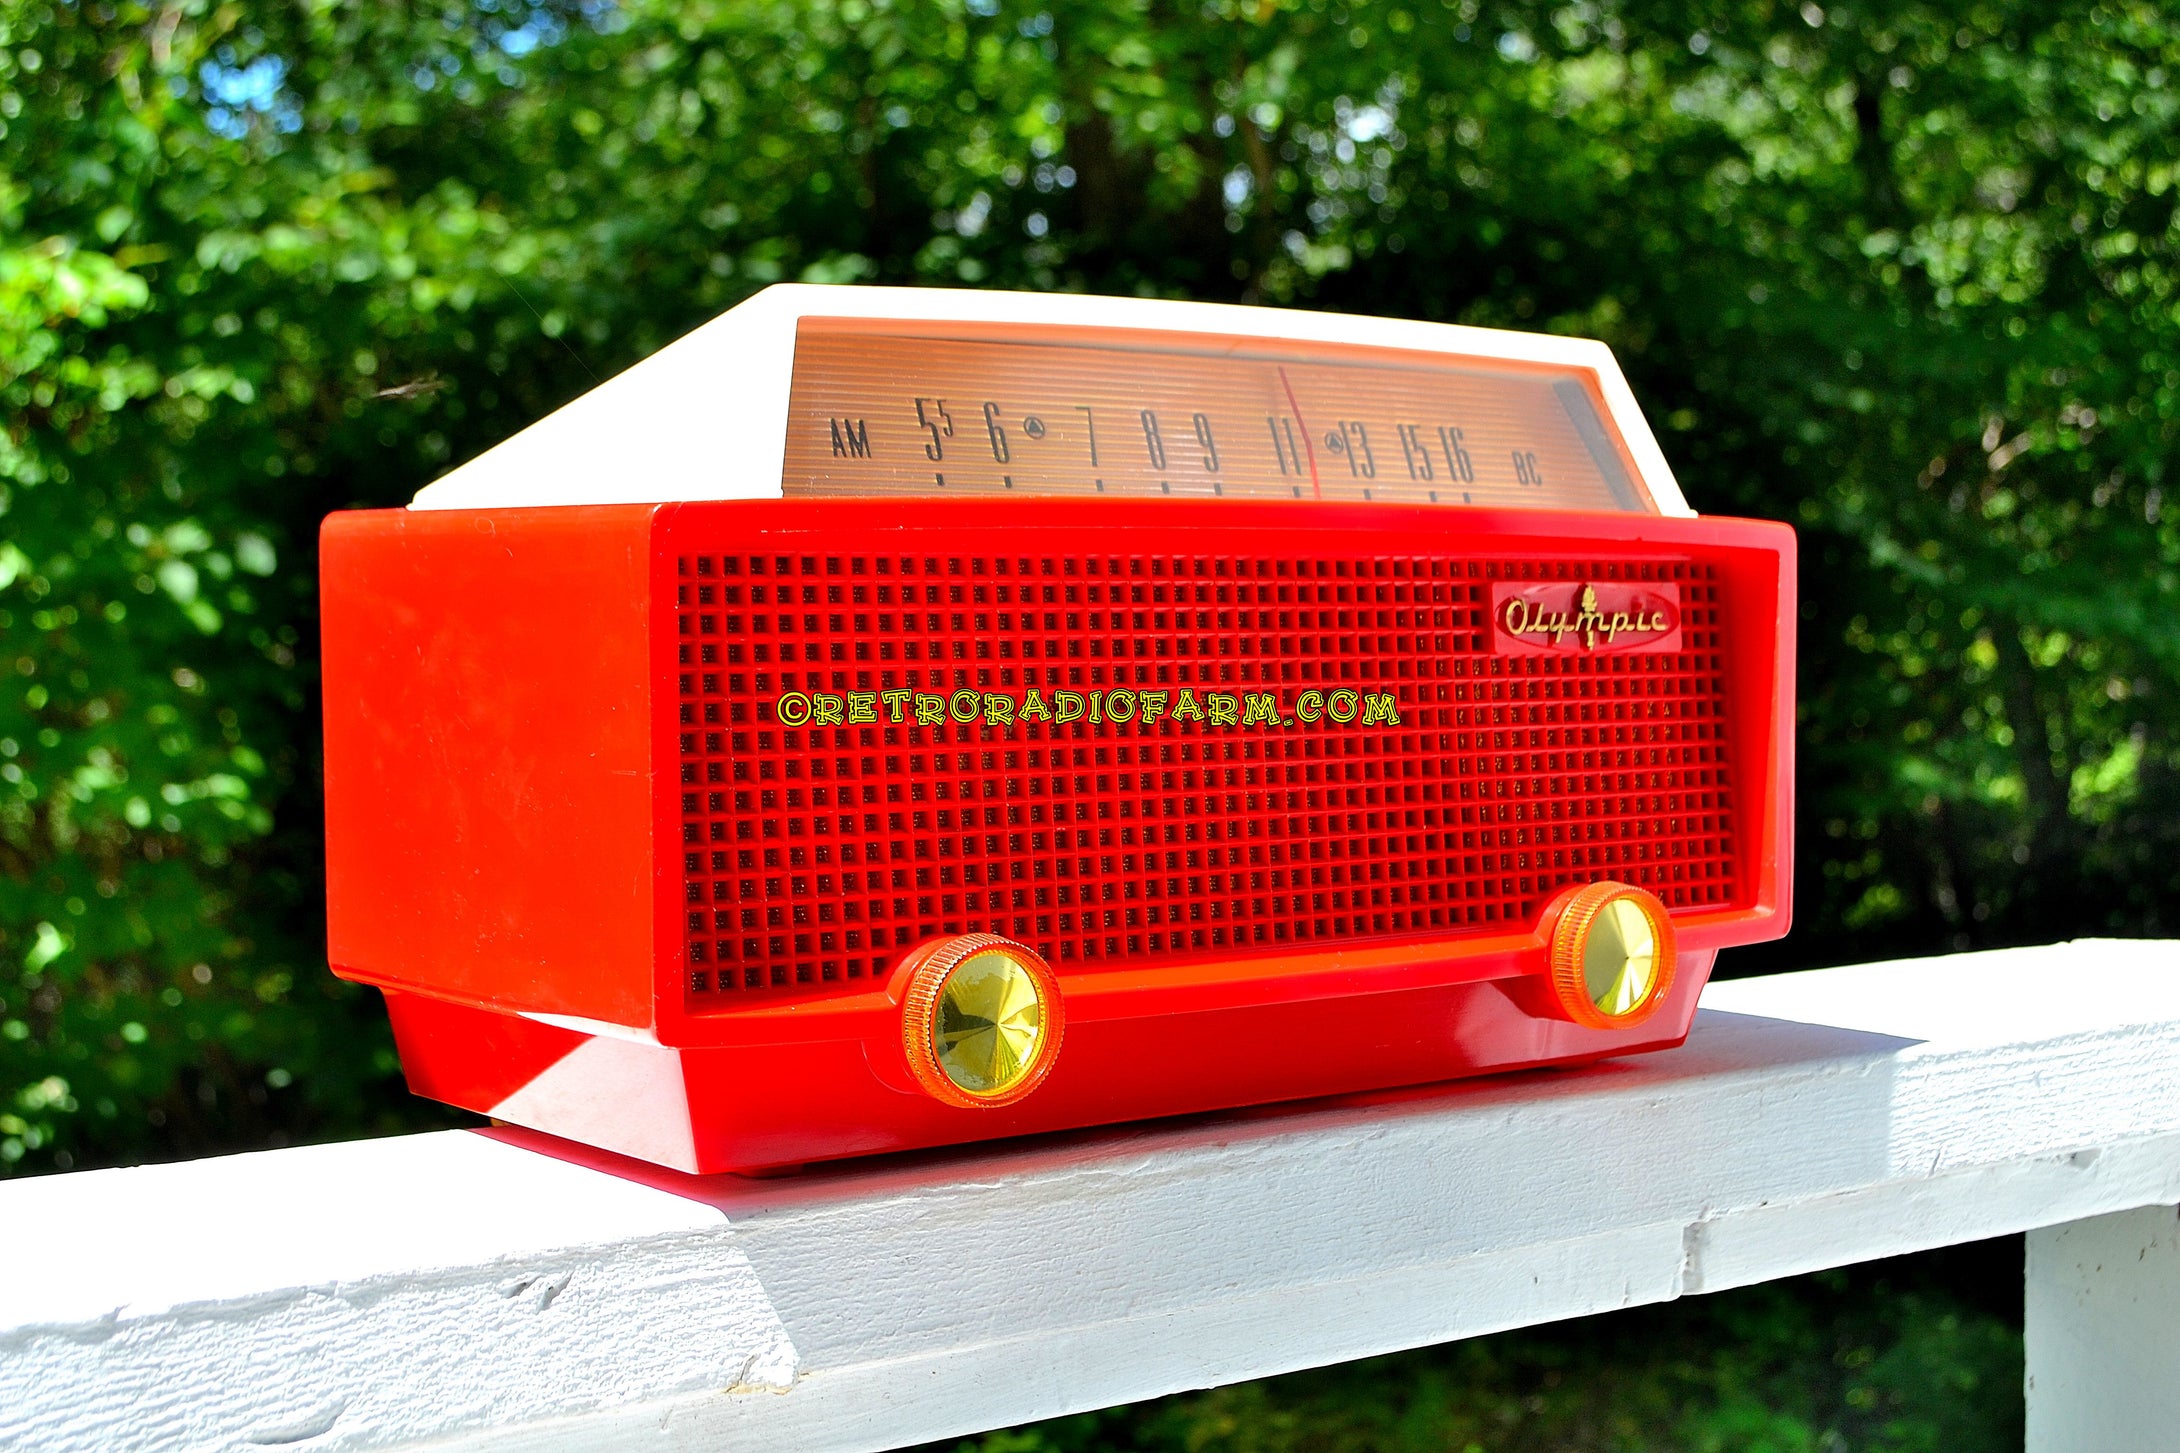 SOLD! - Sept 24, 2017 - RED RIDING HOOD Mid Century Retro Vintage 1956 Olympic Model 552 Tube AM Radio Totally Sick! - [product_type} - Olympic - Retro Radio Farm